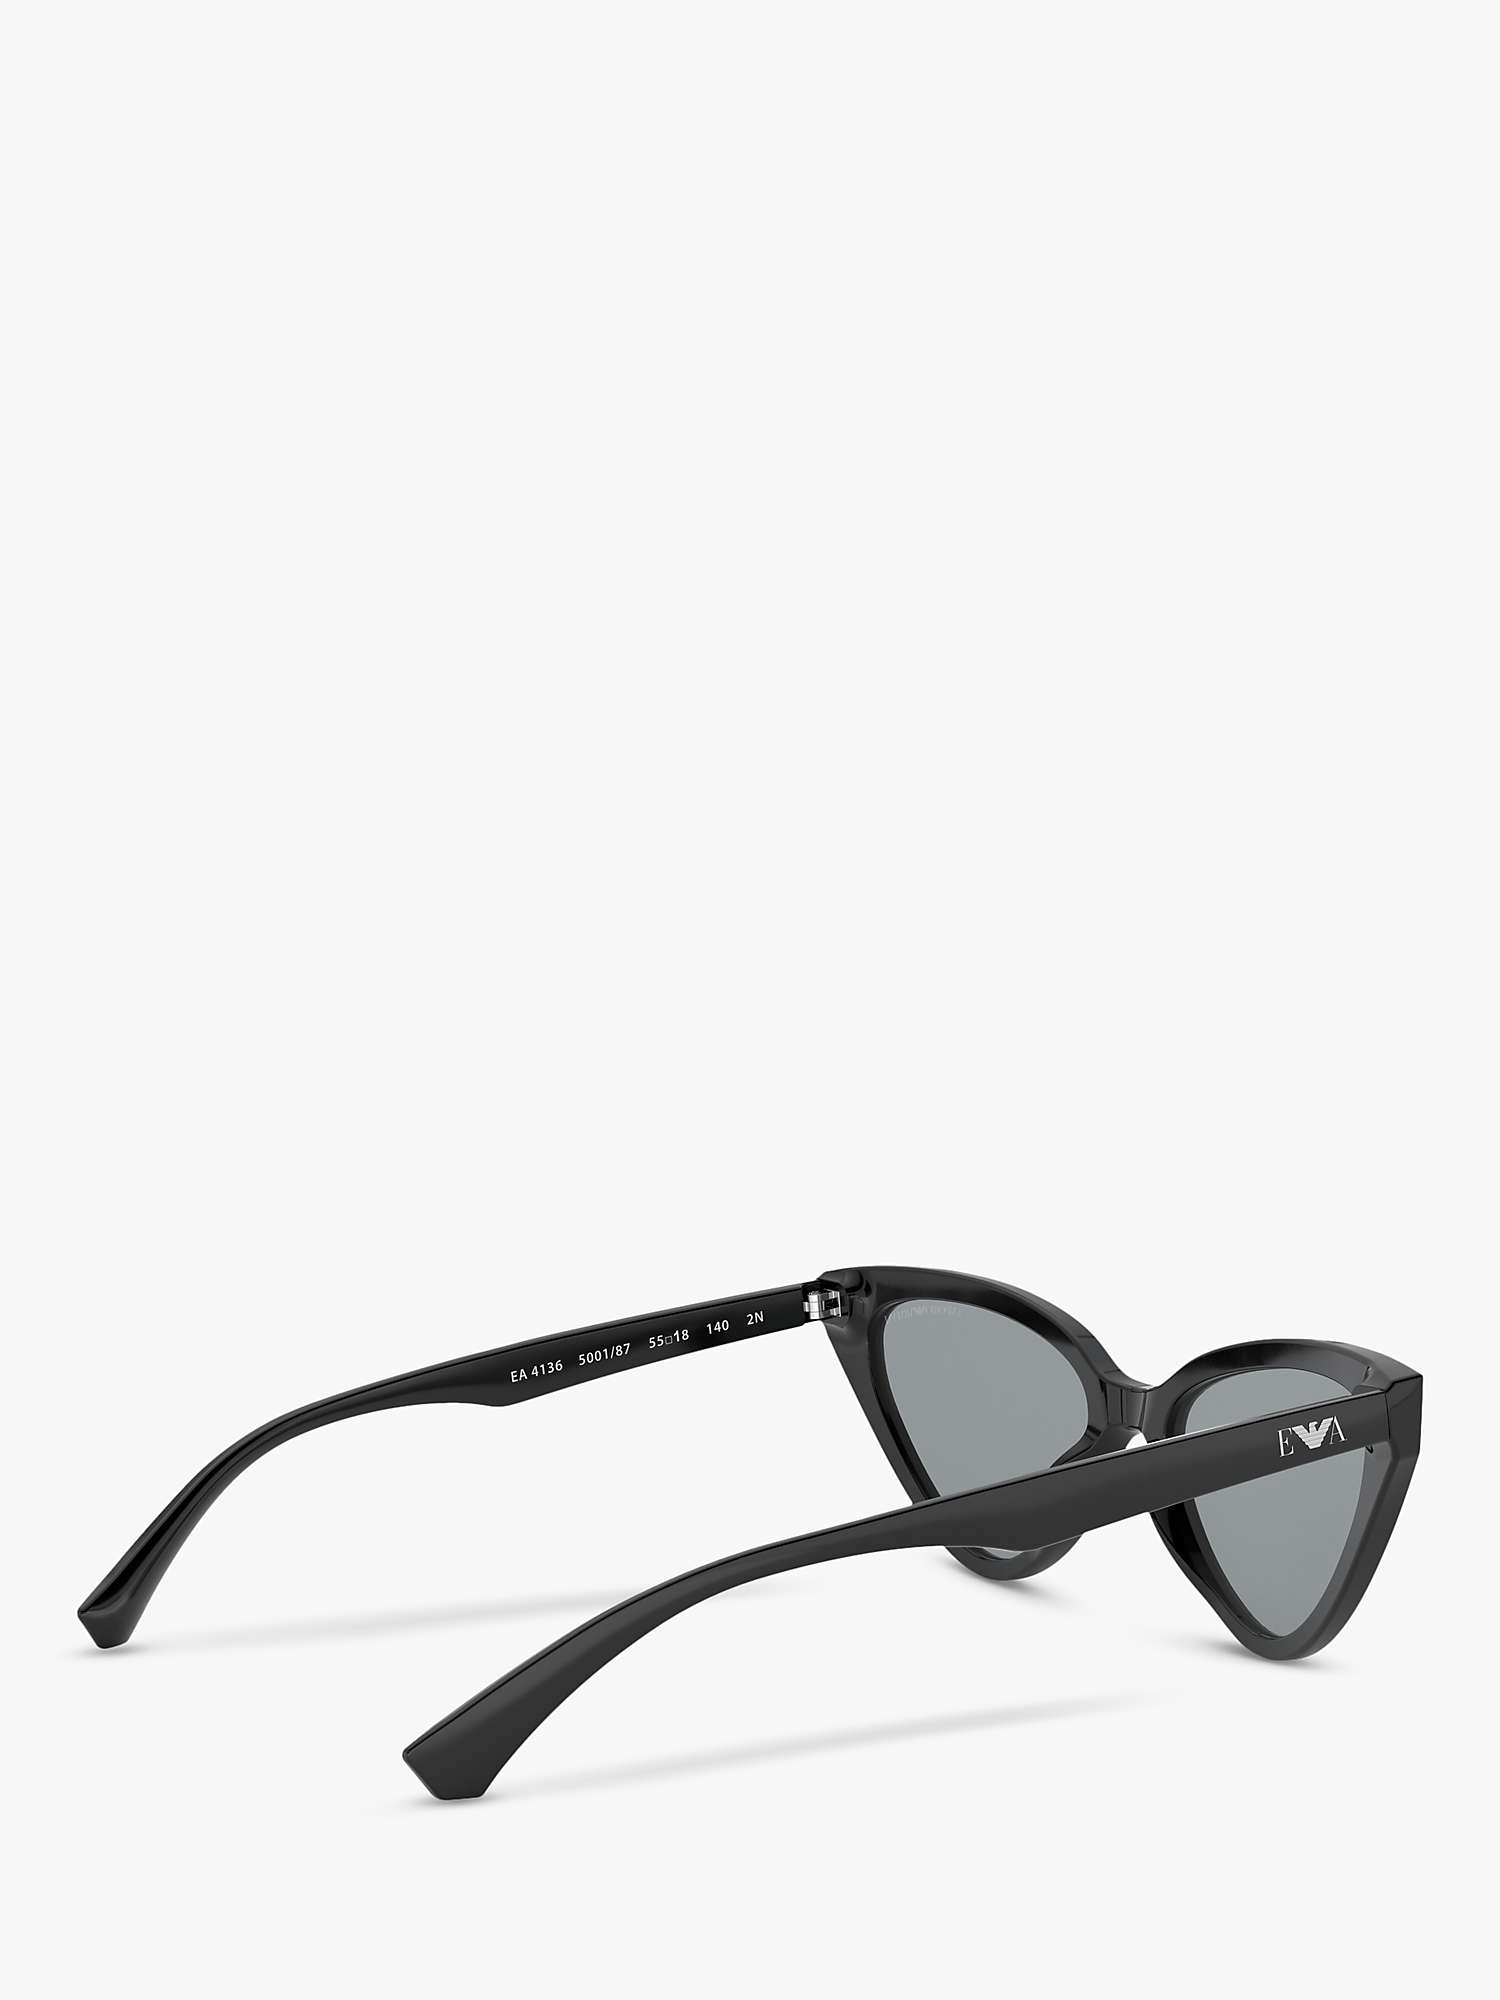 Buy Emporio Armani EA4136 Women's Cat's Eye Sunglasses, Black/Grey Online at johnlewis.com